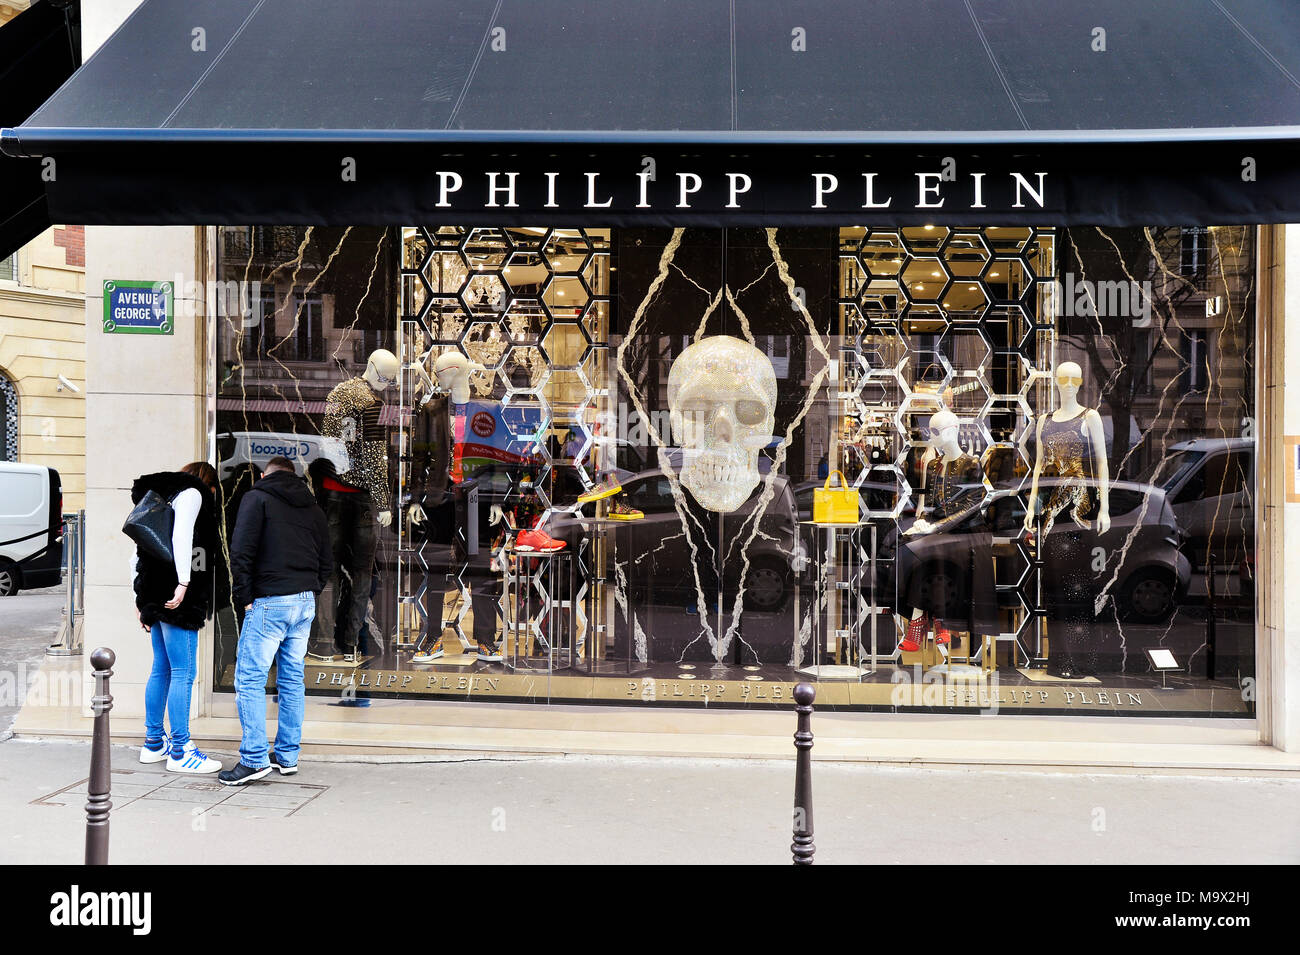 philipp plein outlet store